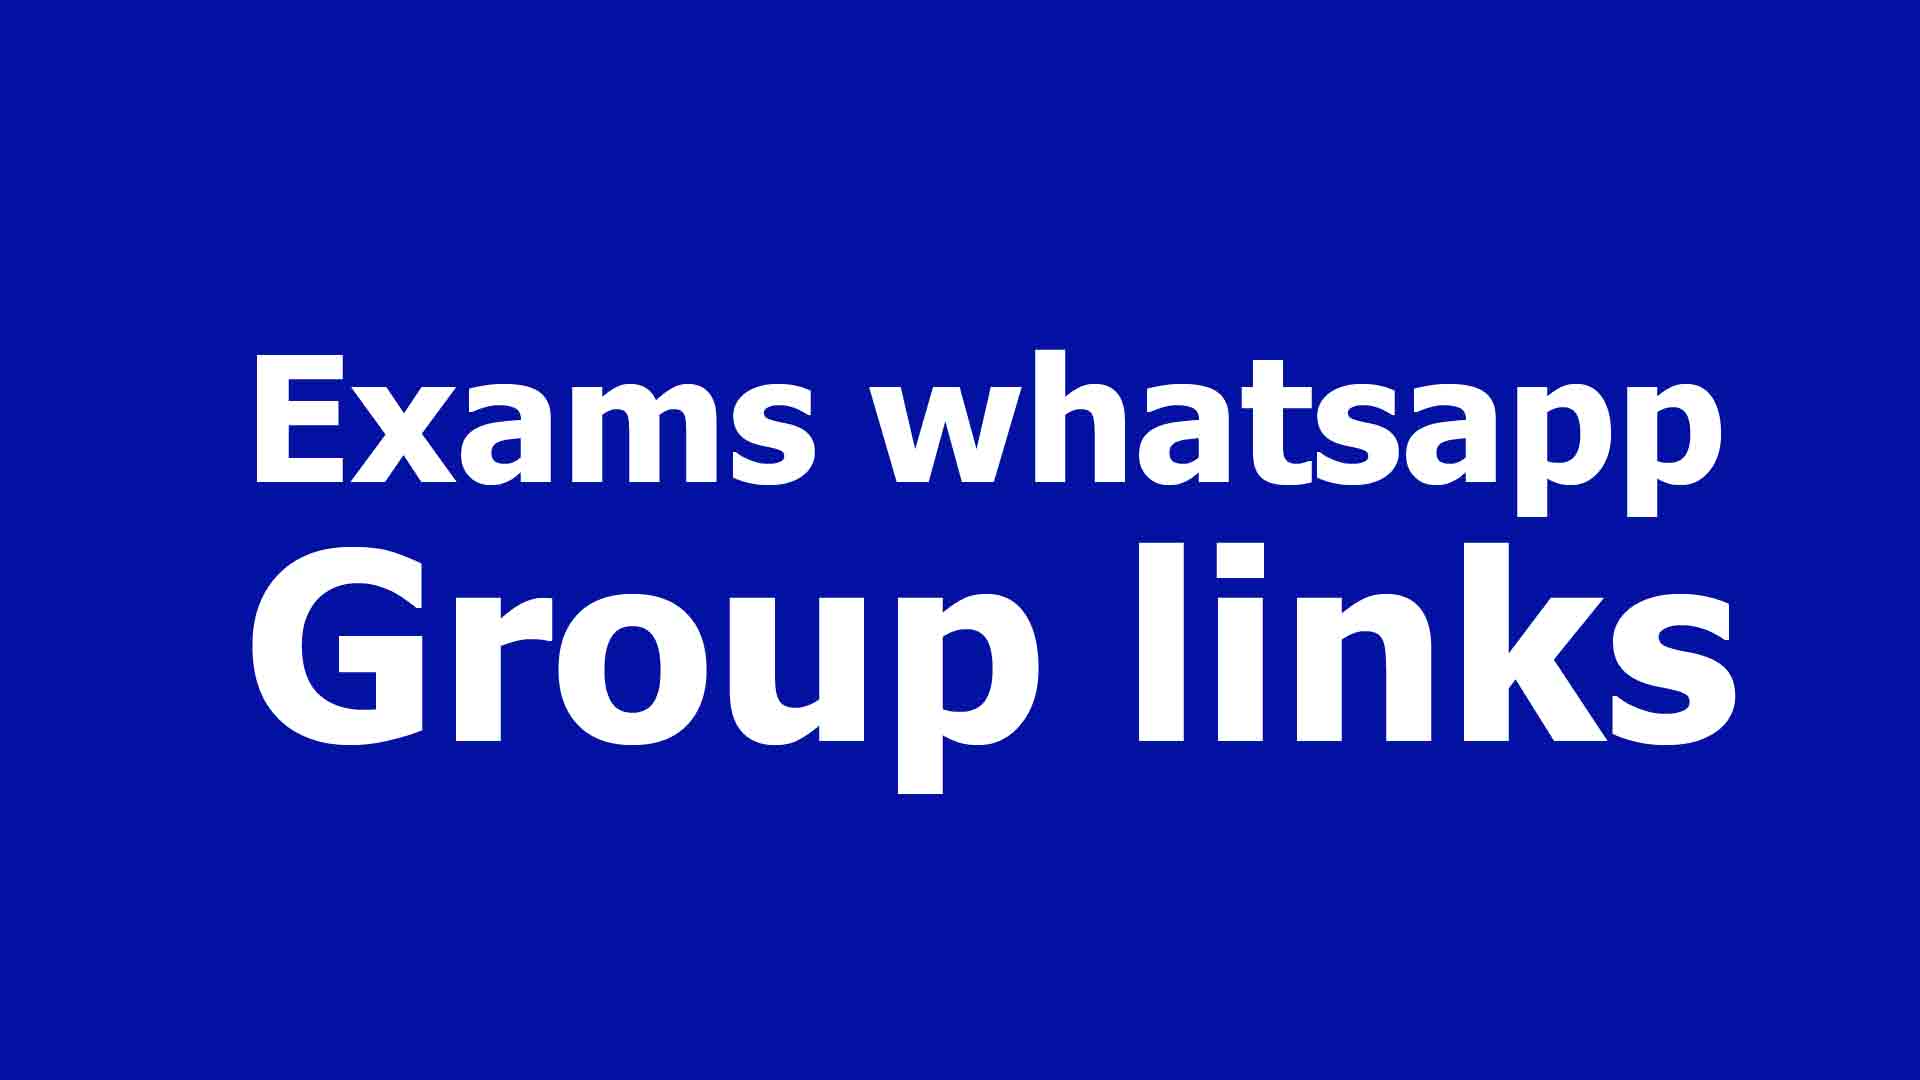 Exams whatsapp Group links